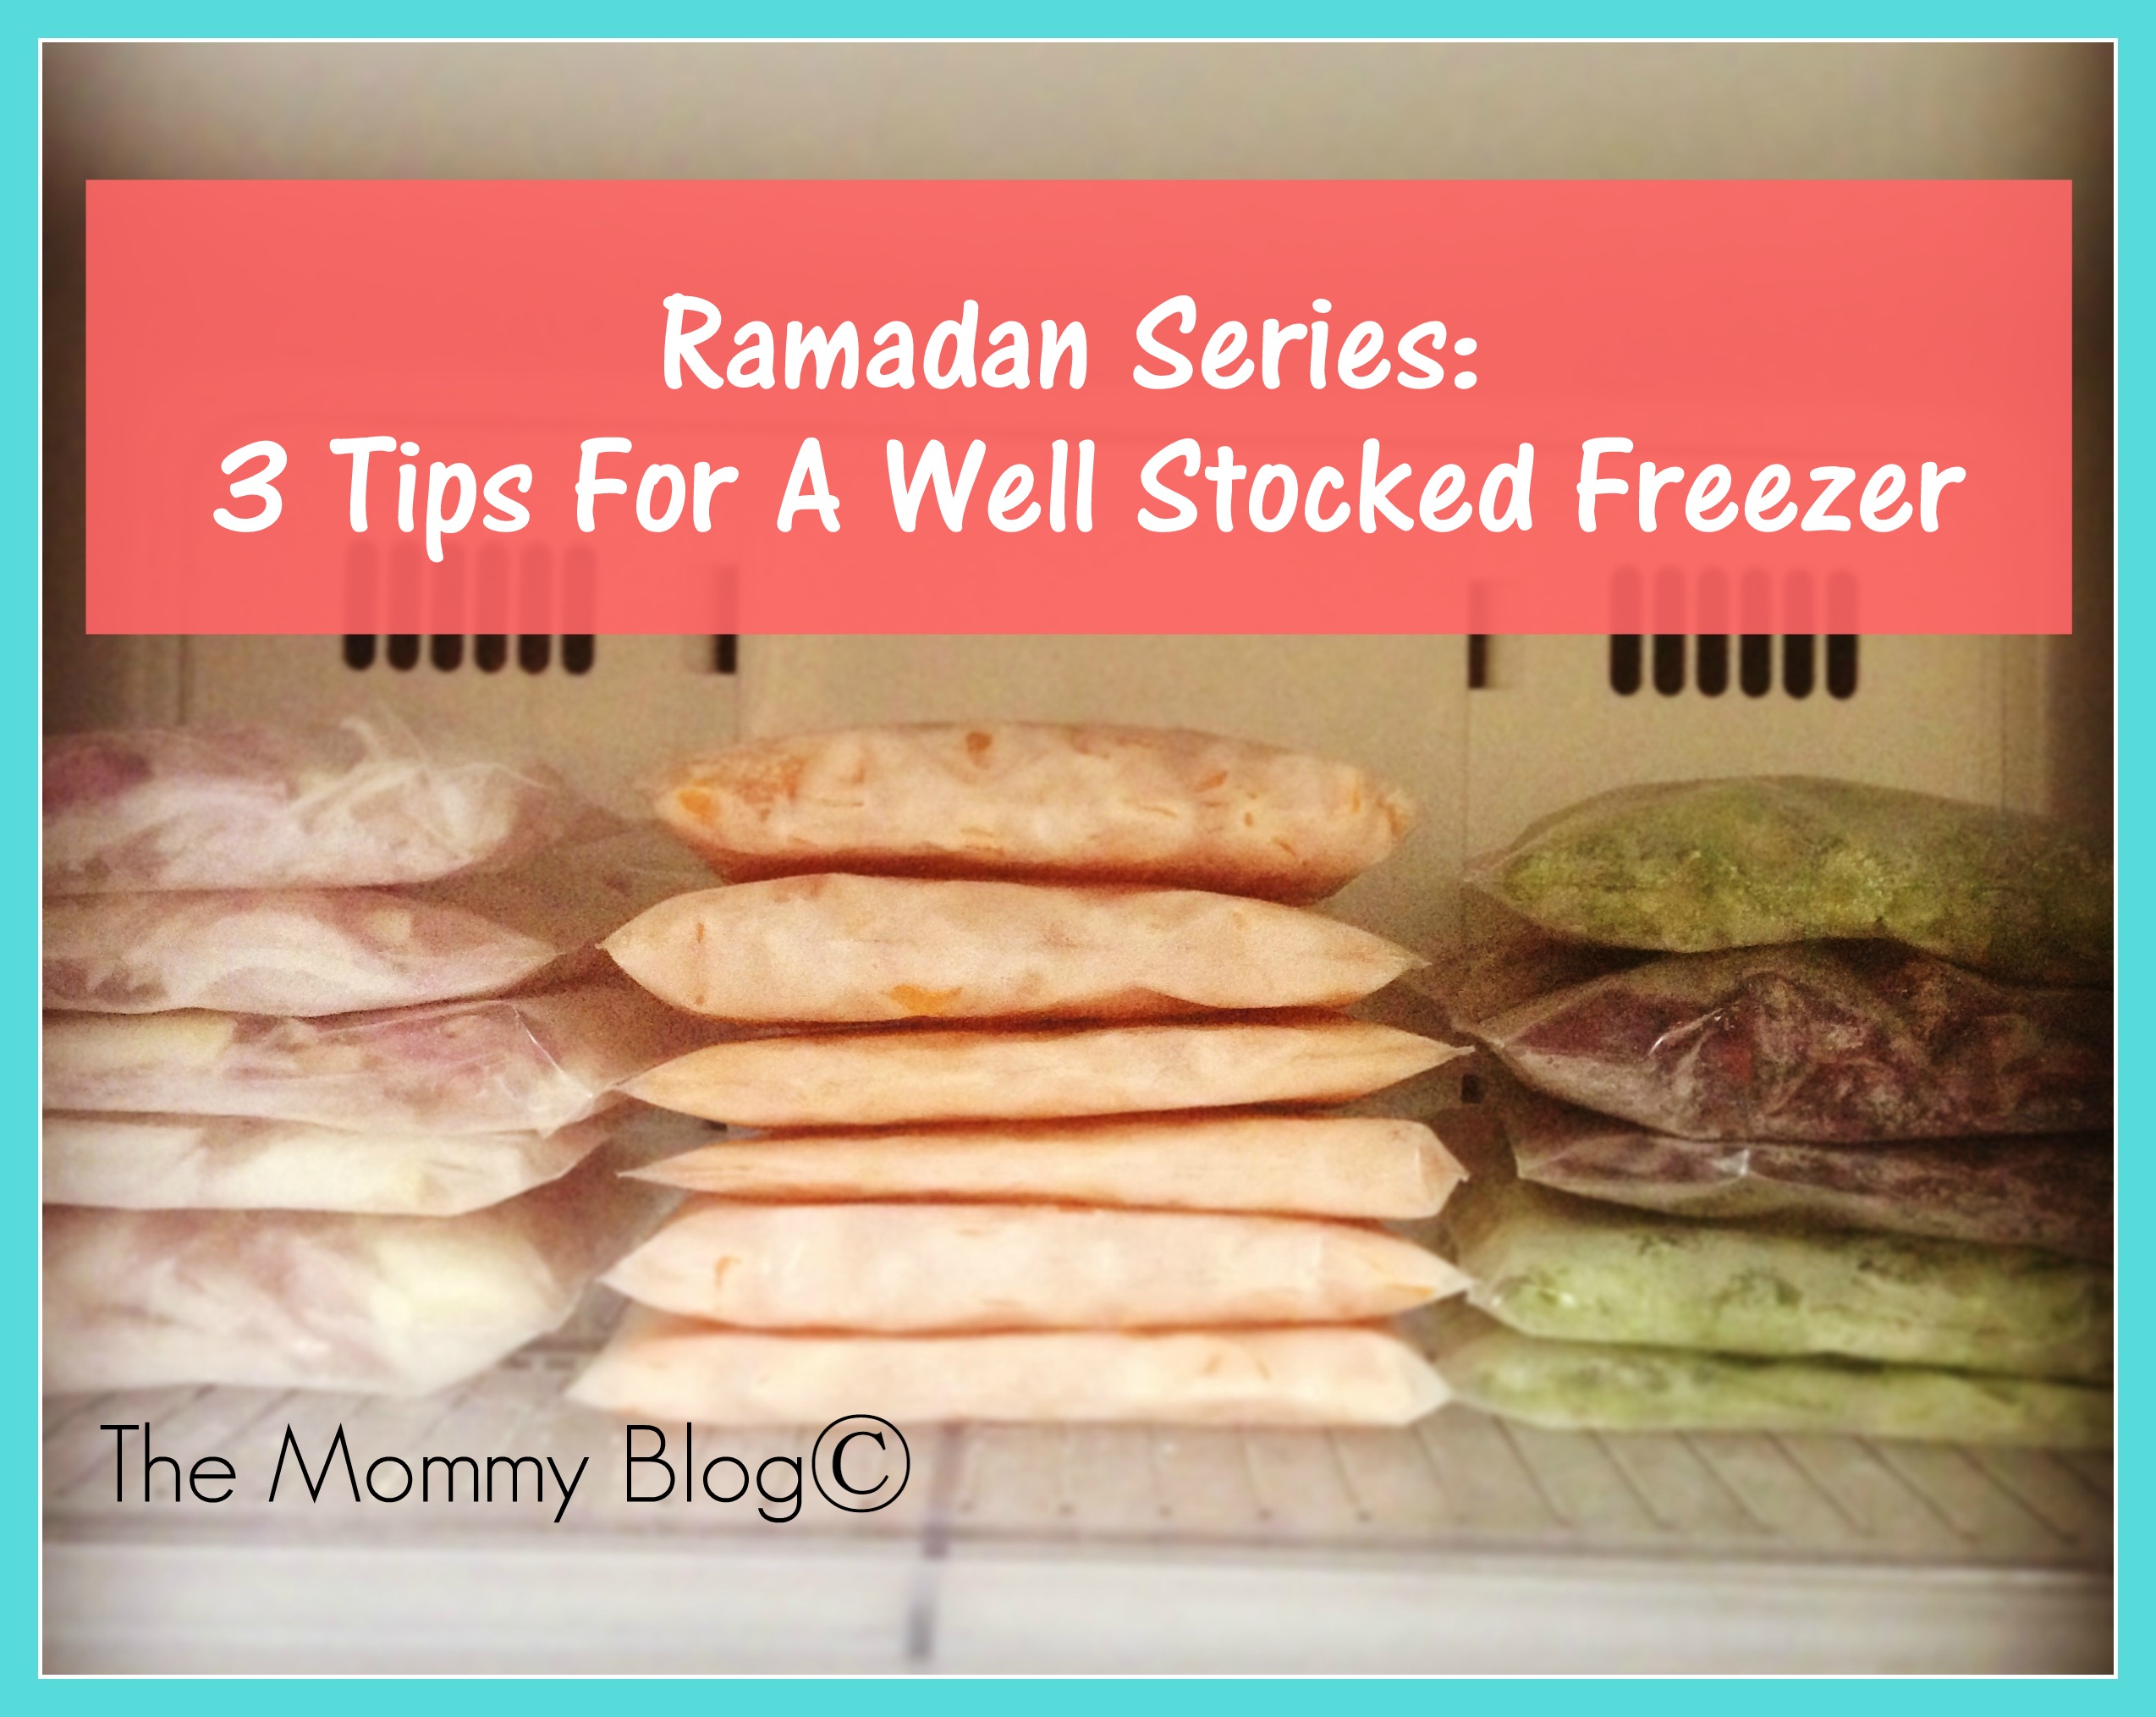 ramadan tips The Mommy Blog